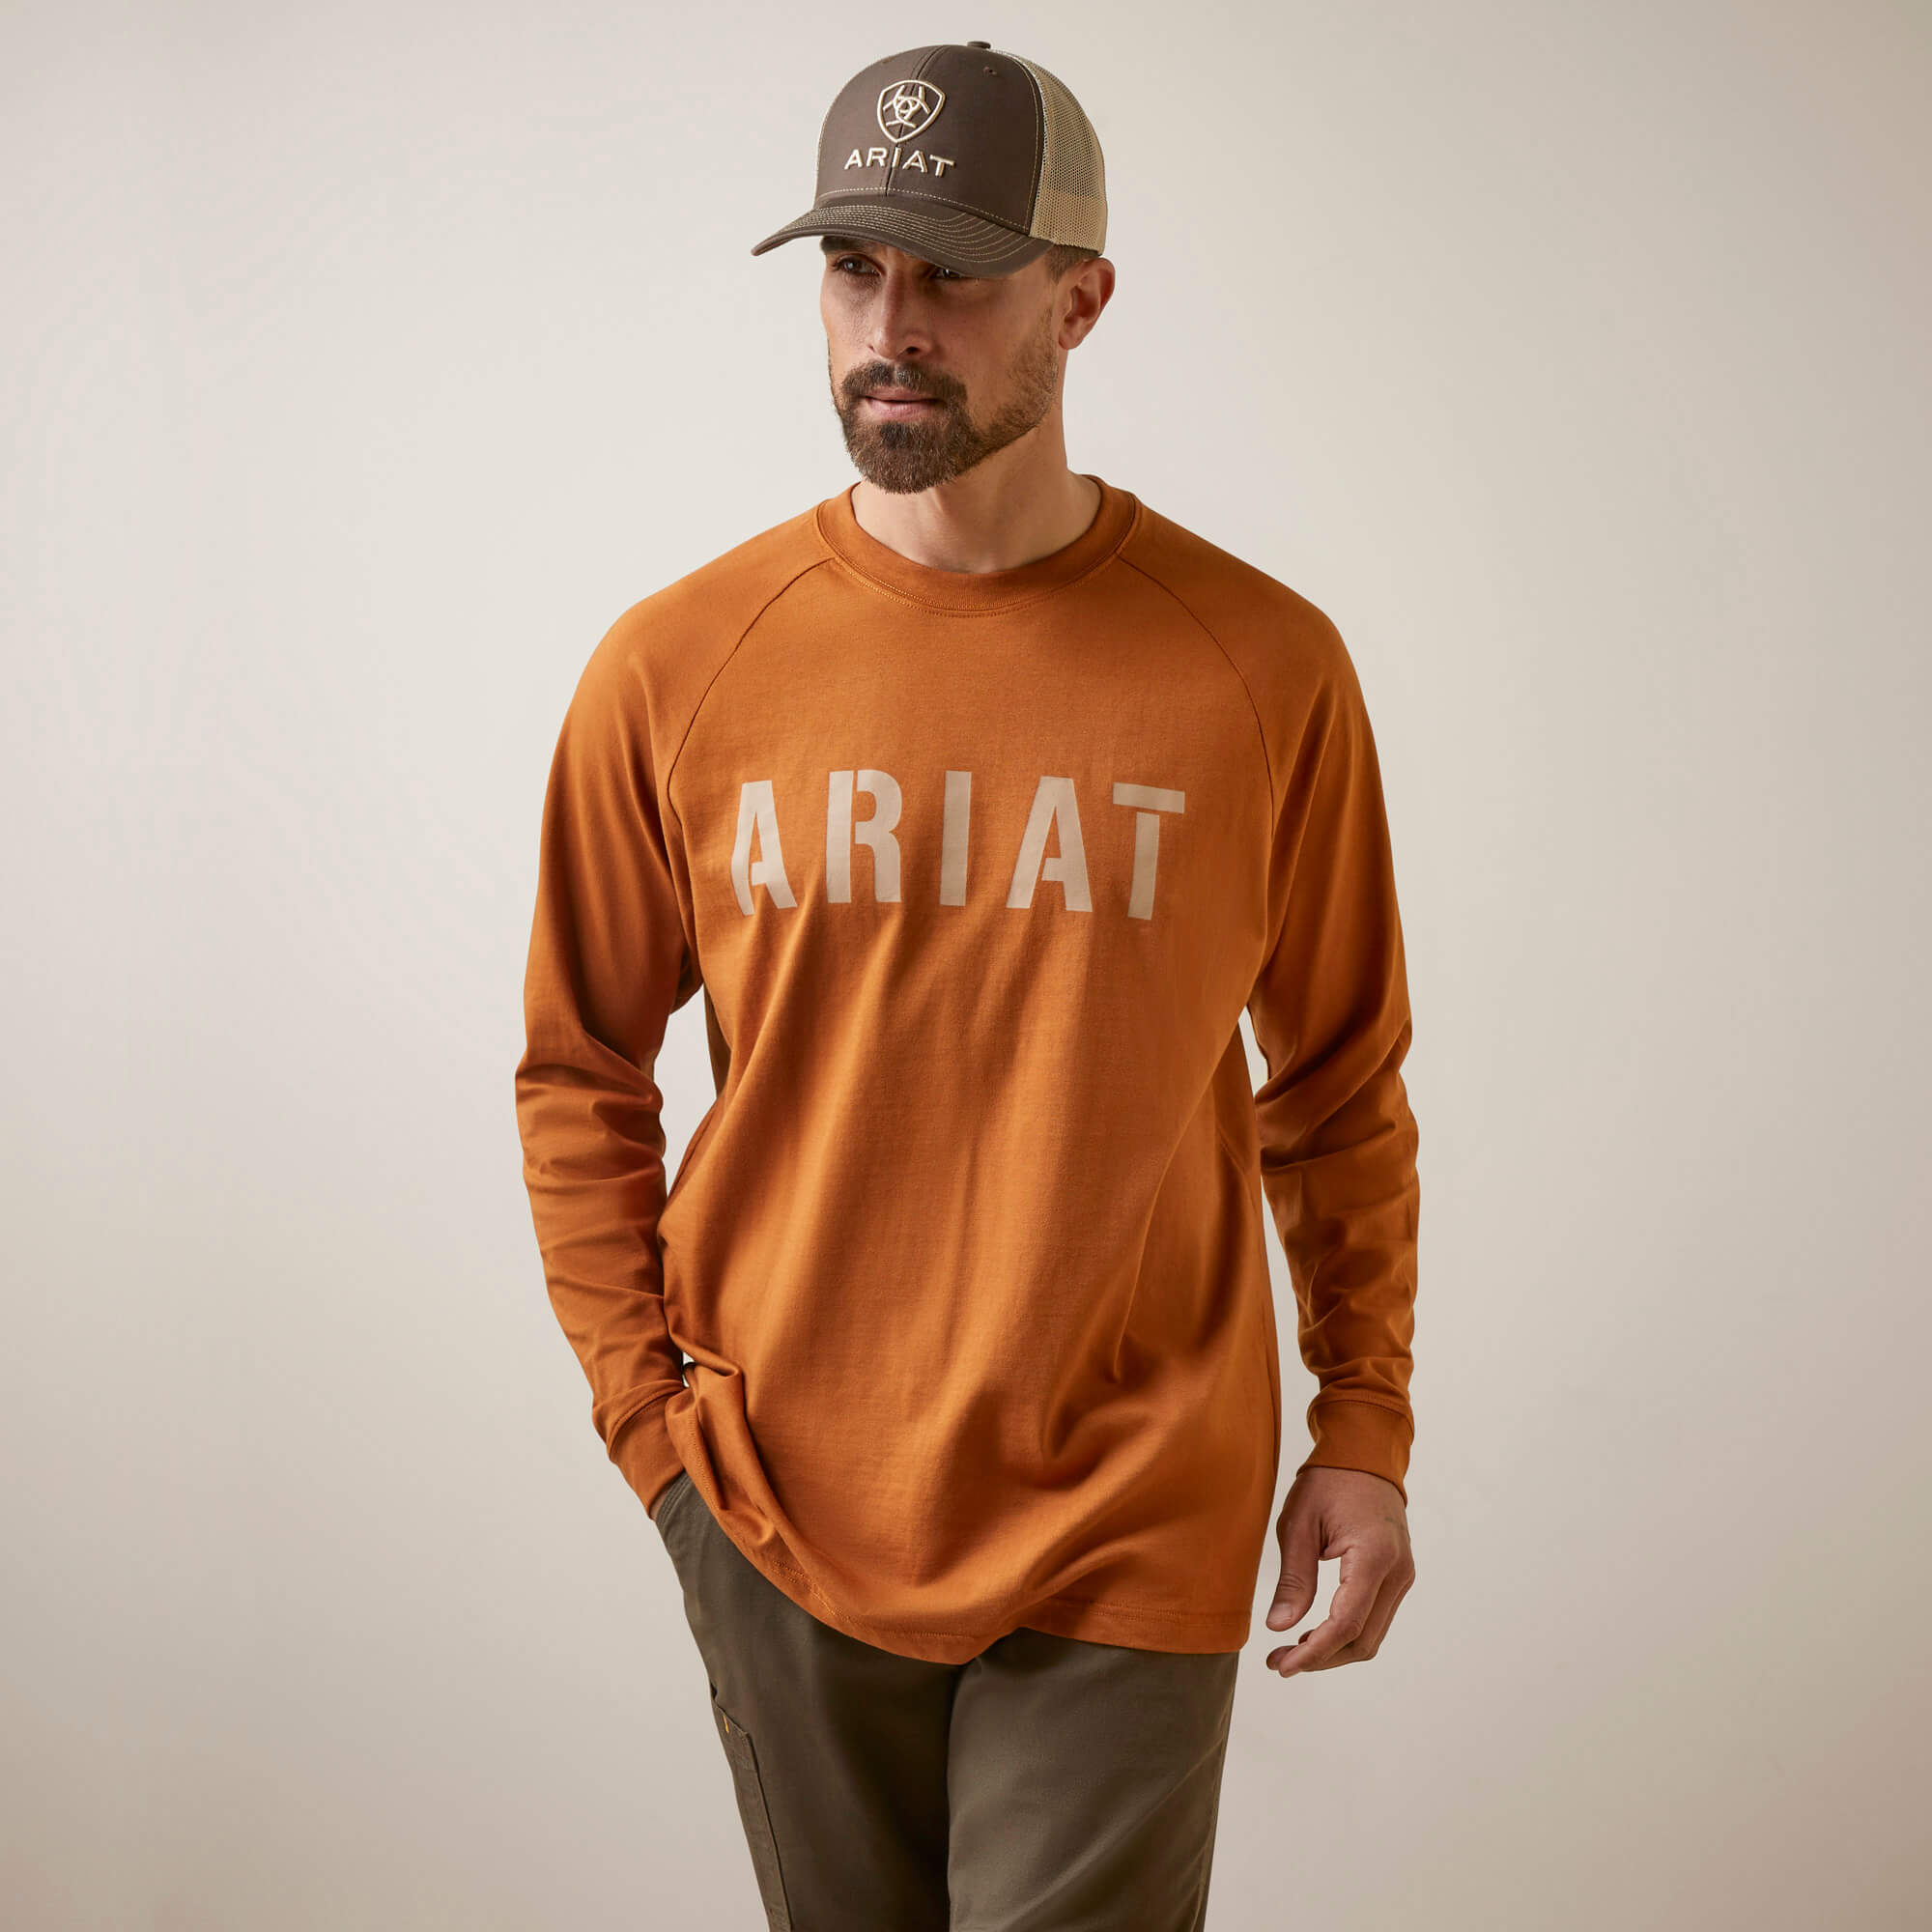 Ariat Men's Rebar Cotton Strong Block T-Shirt